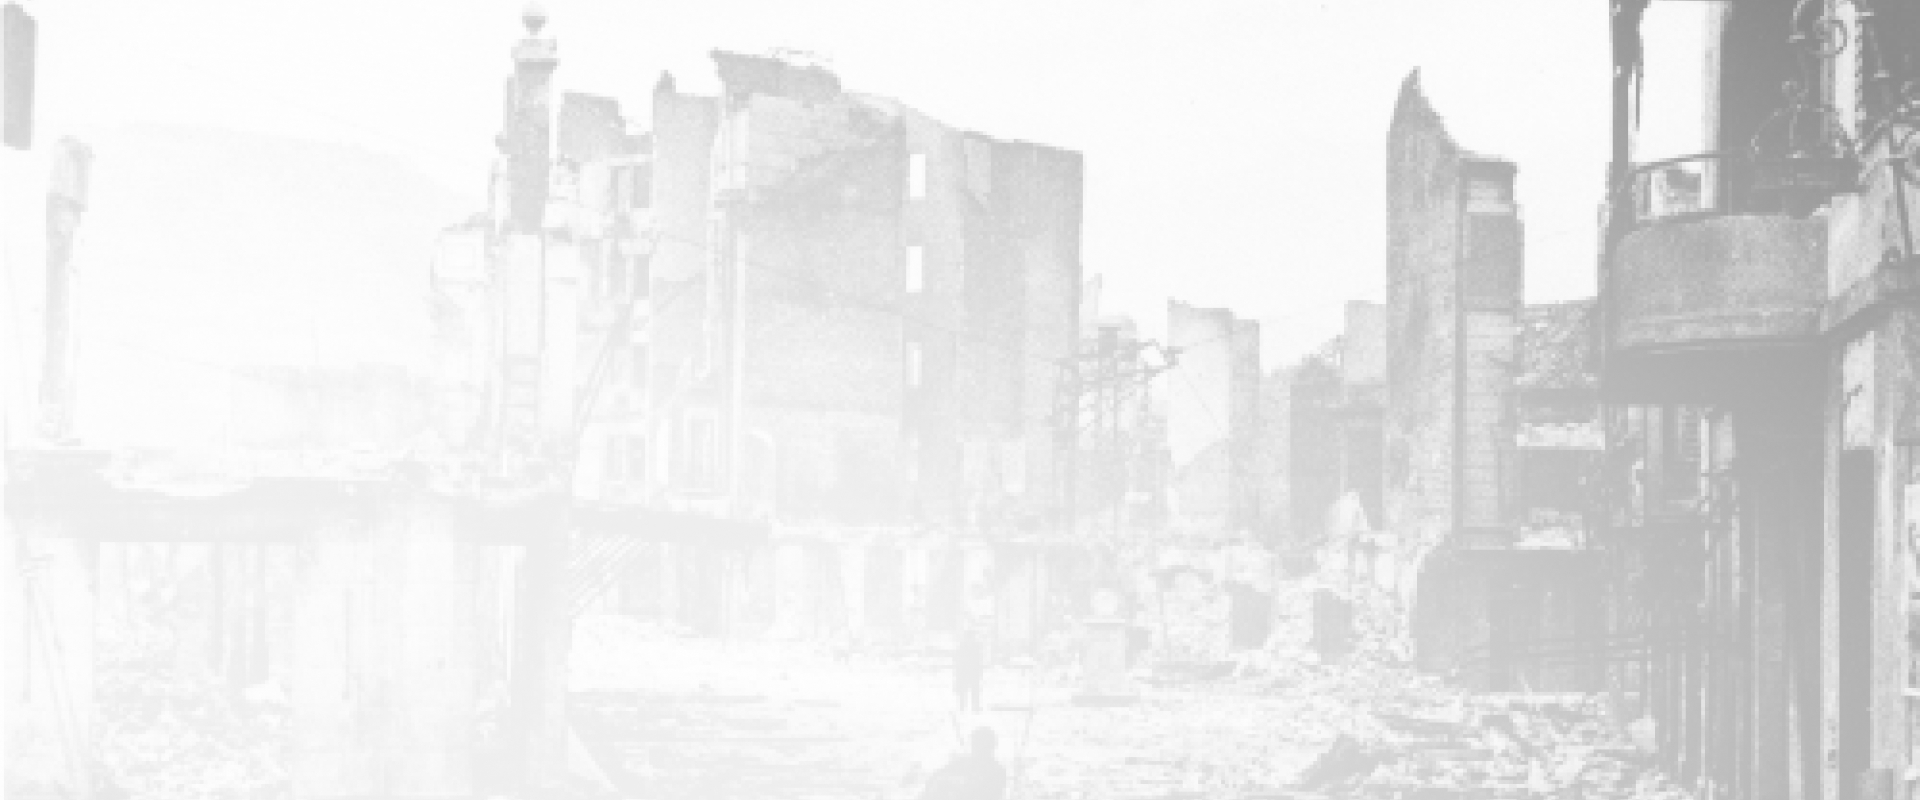 Image of the bombing of Gernika